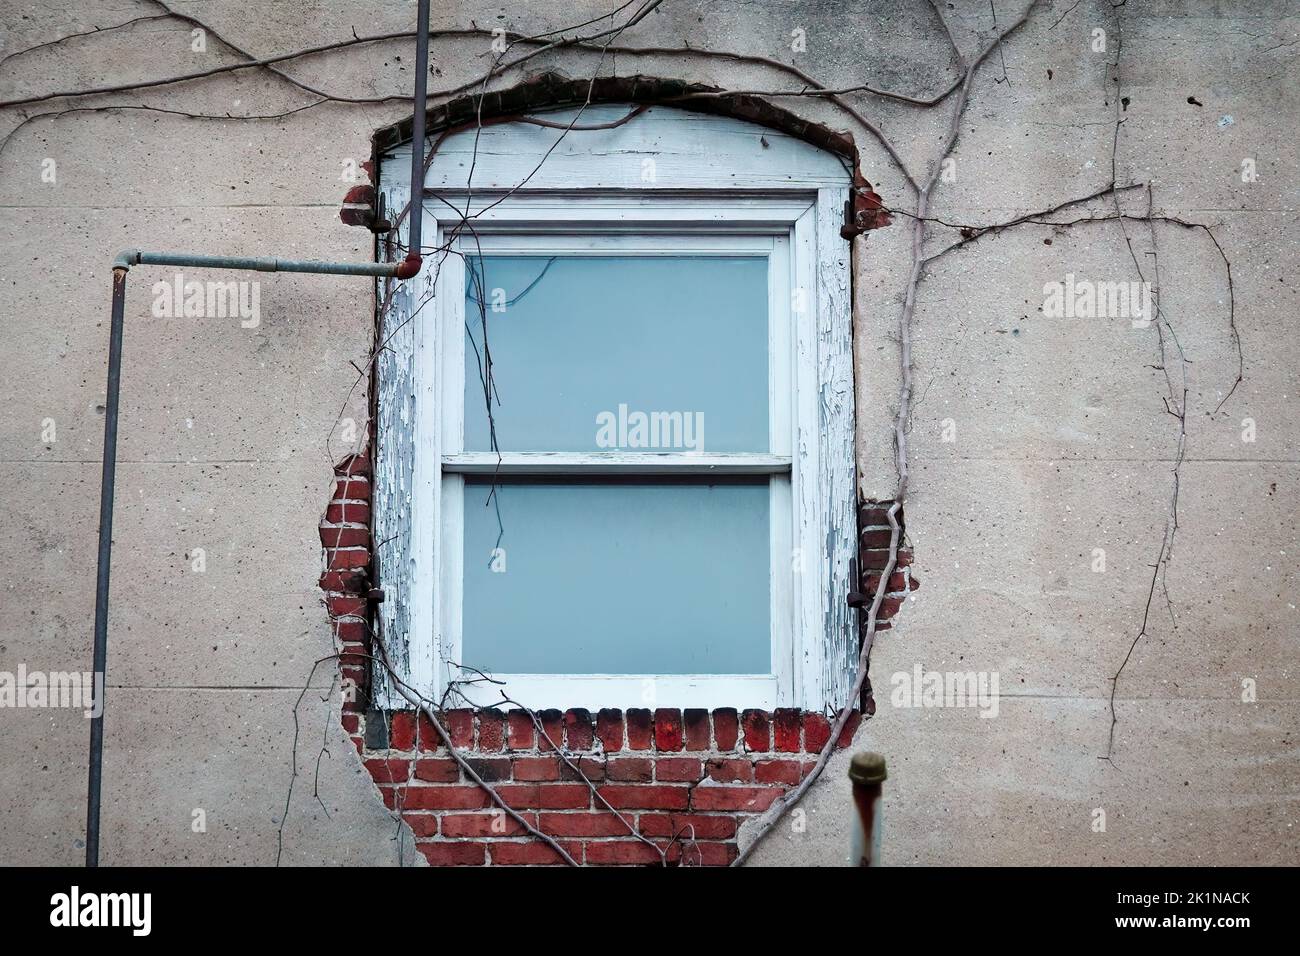 Single urban widow ith peeling paint and exposed conduit. Stock Photo